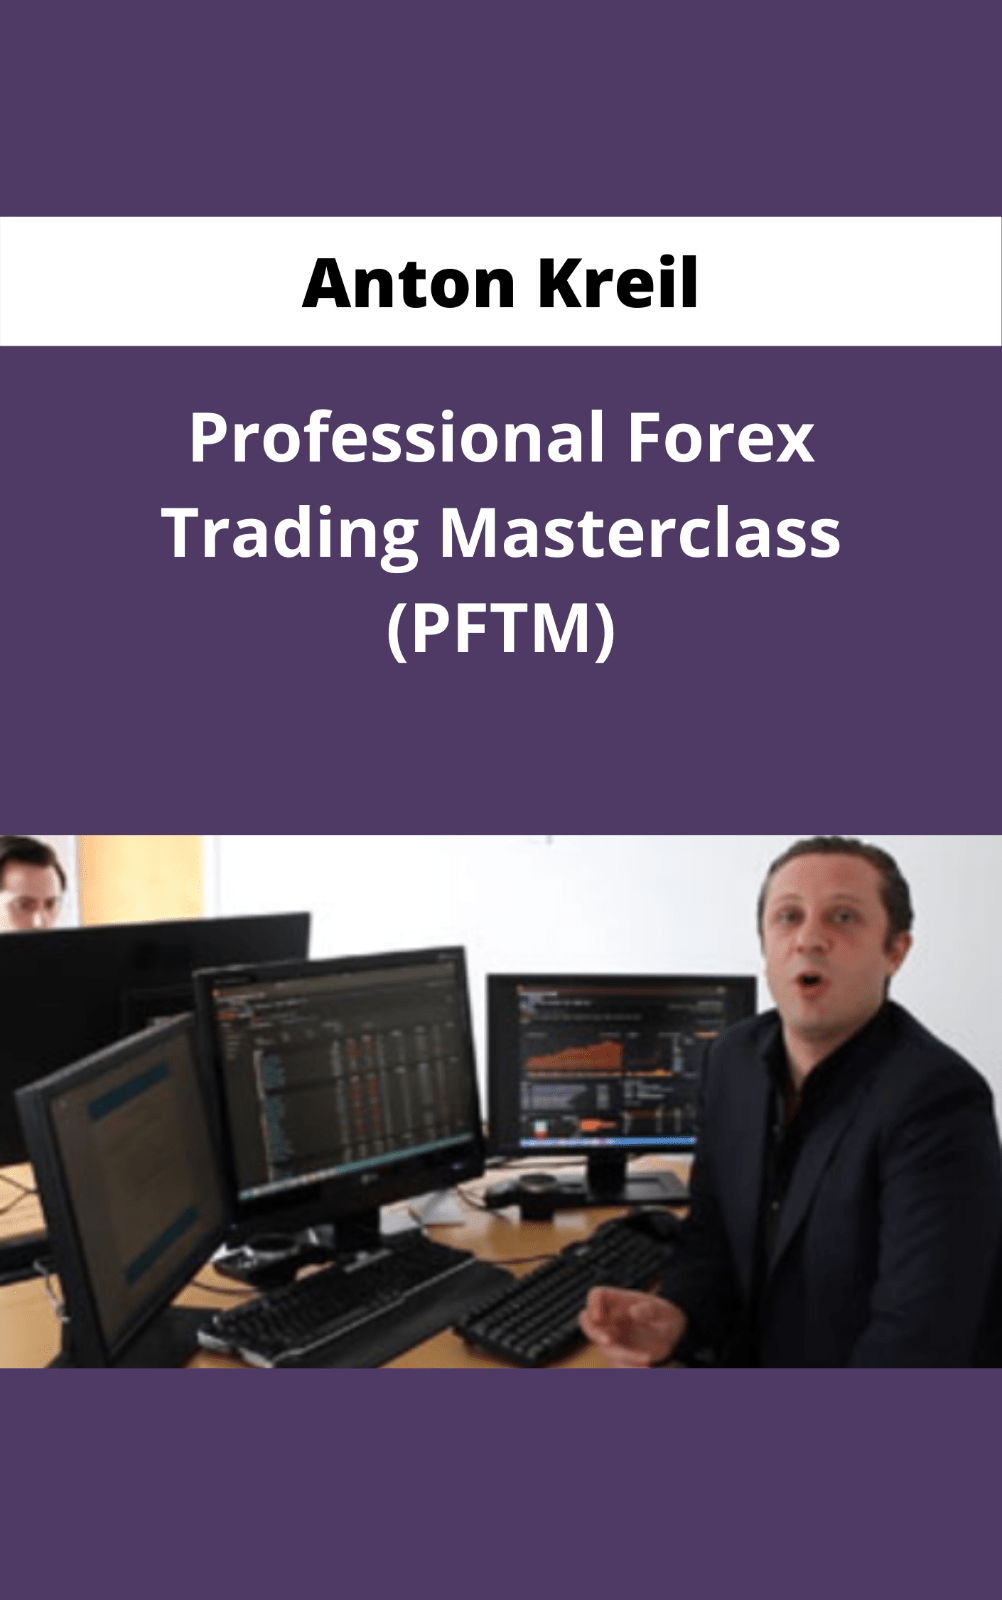 [GET] Anton Kreil – Trading Masterclass POTM + PFTM + PTMI Free Download